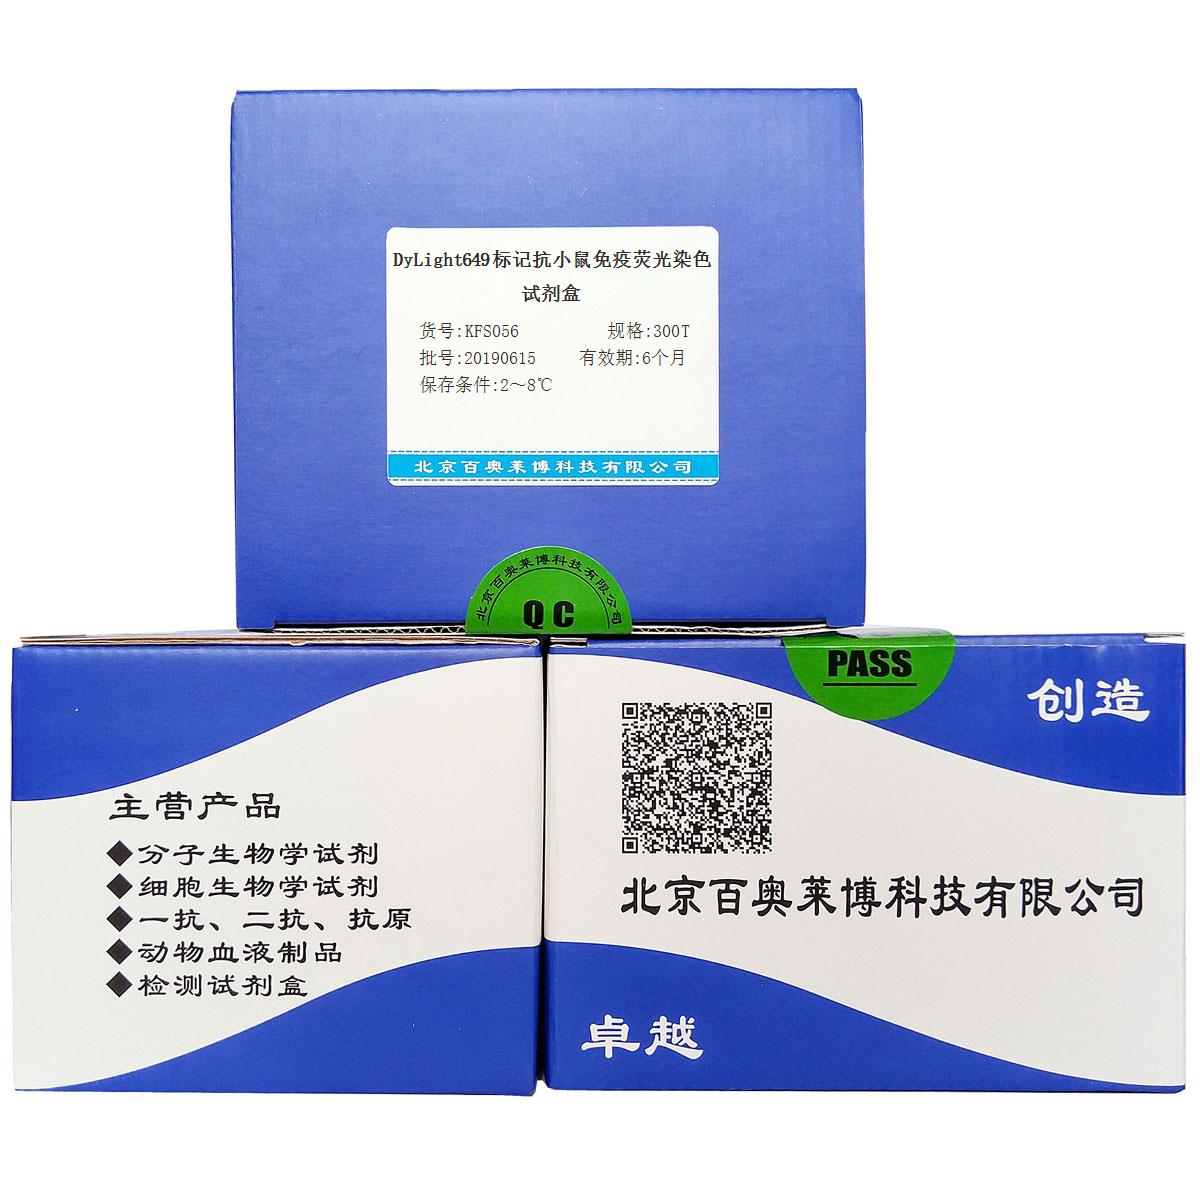 DyLight649标记抗小鼠免疫荧光染色试剂盒